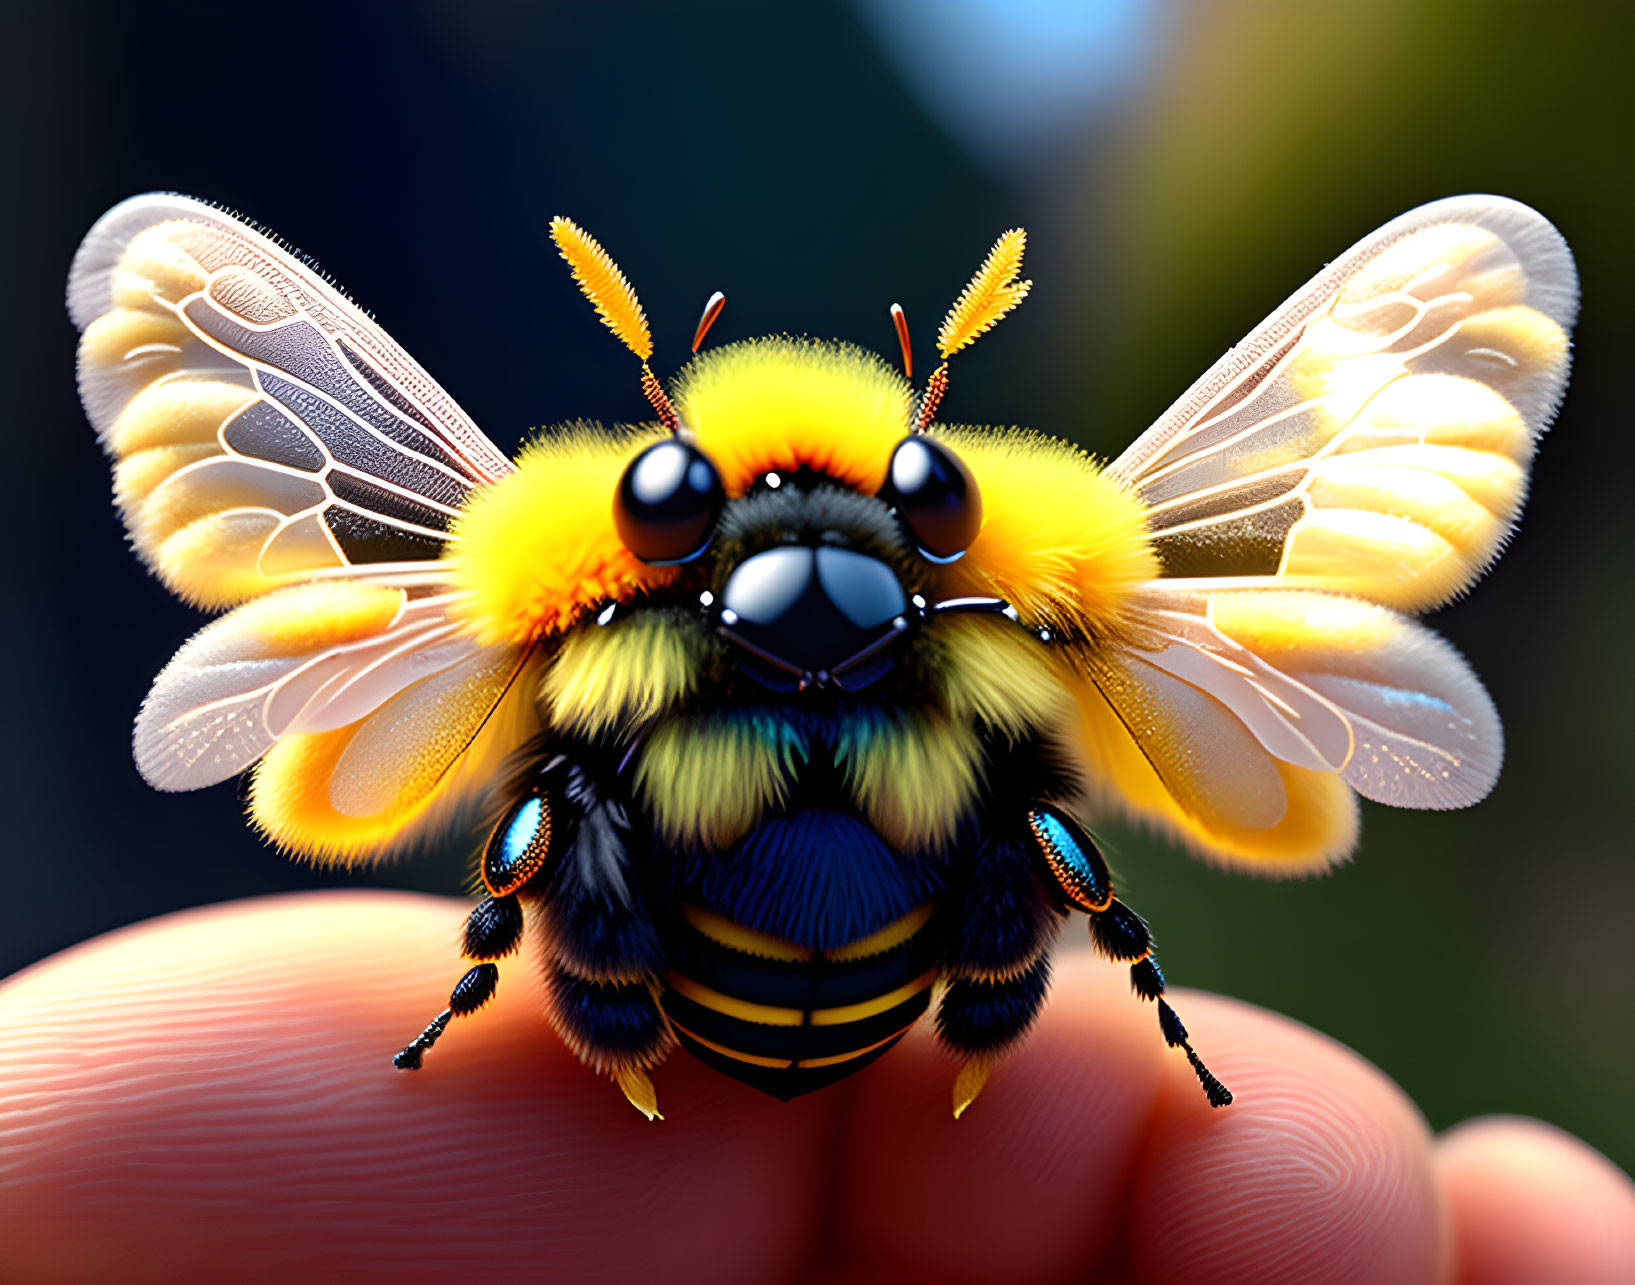 Detailed Close-Up Illustration of Bumblebee on Fingertip